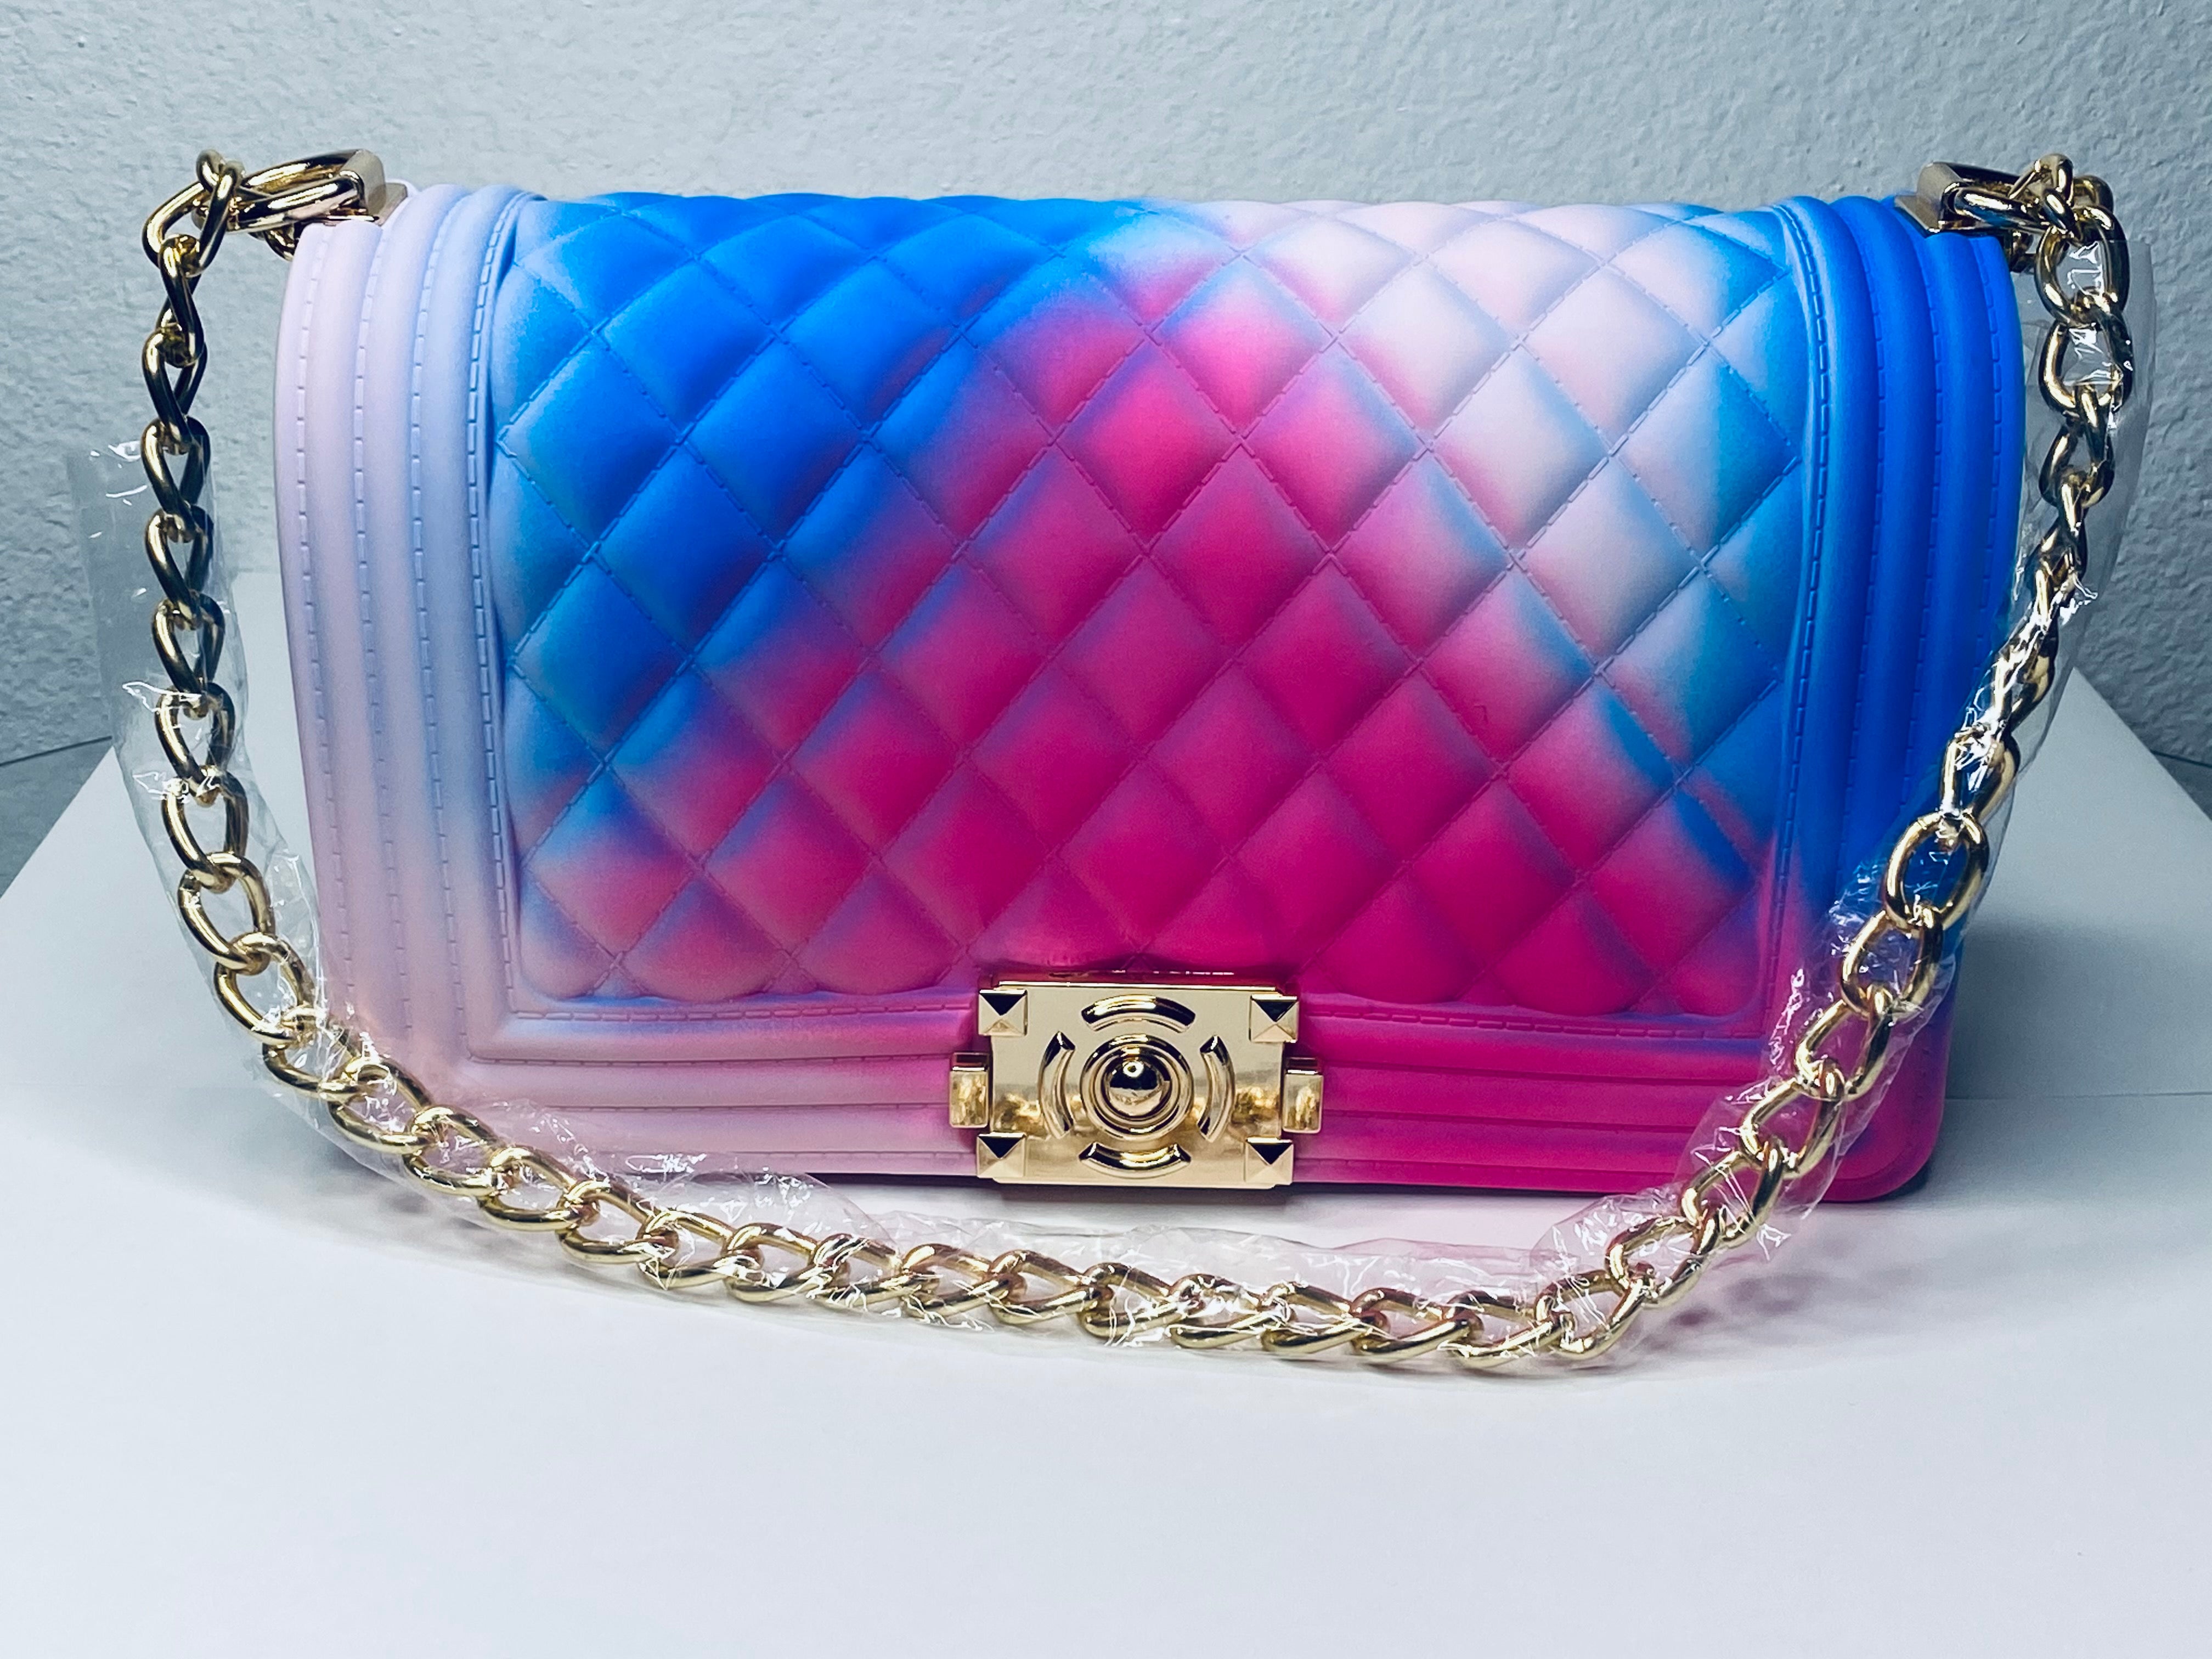 PVC women designer jelly purses | Buy cheap bags online in lagos